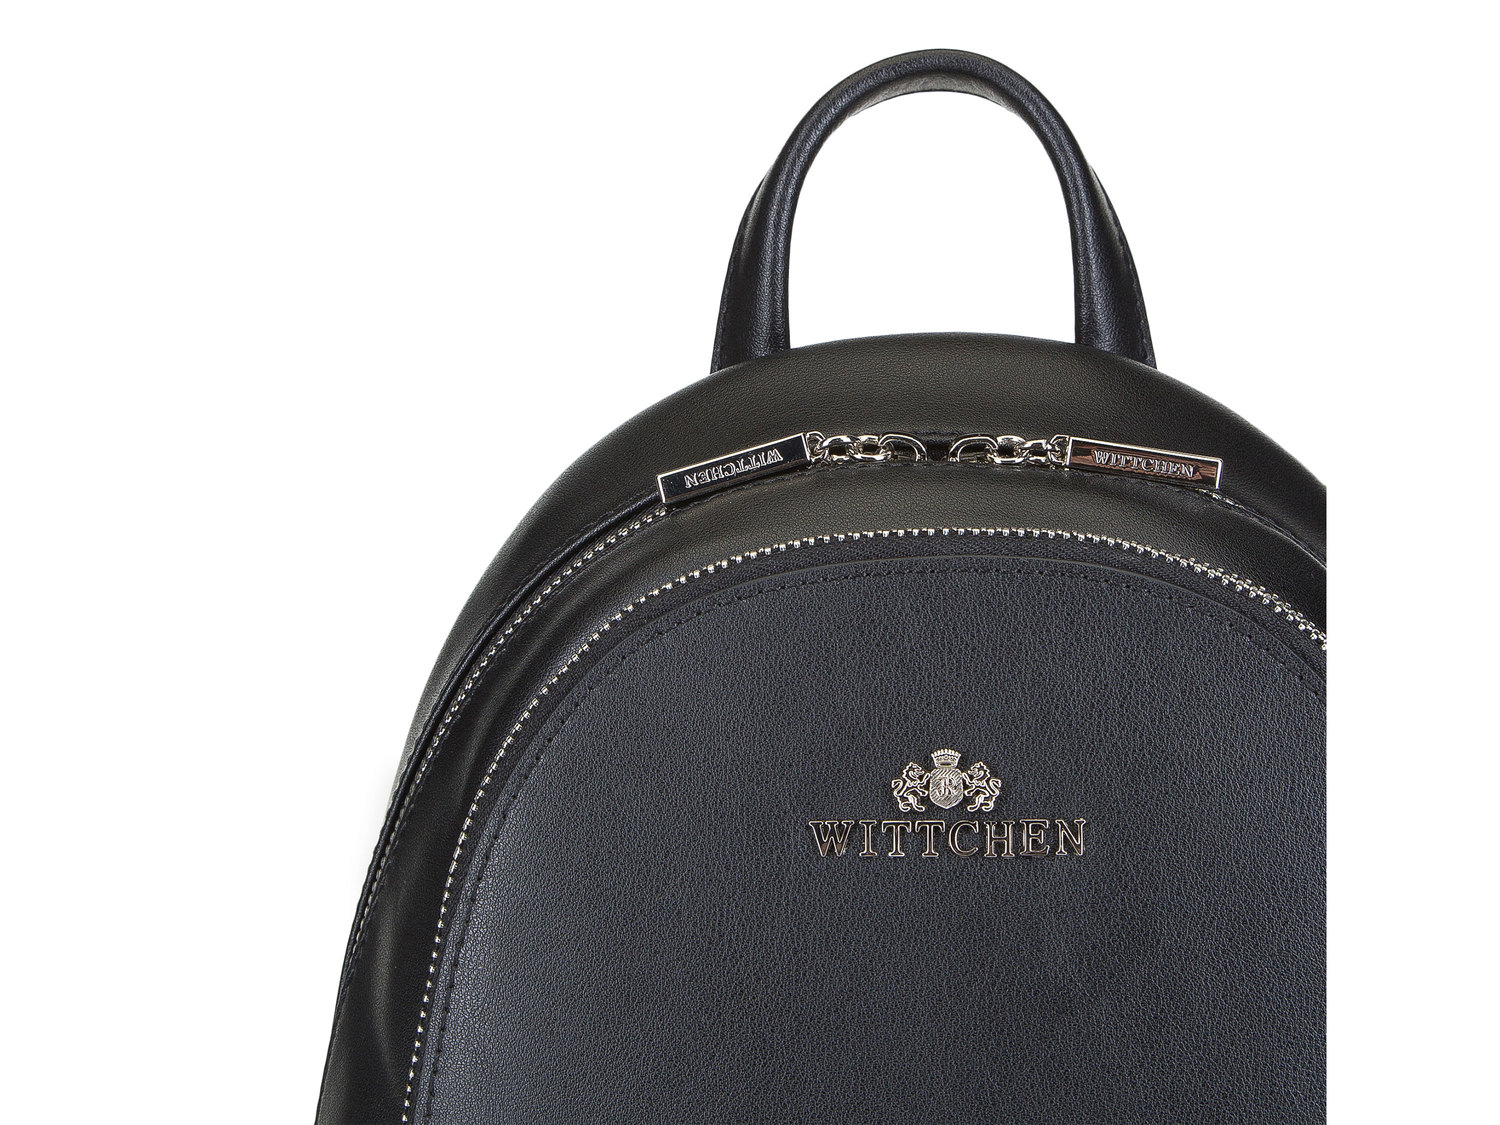 Plecak z naturalnej włoskiej skóry Wittchen, cena 279,00 PLN 
Komora gł&oacute;wna ...